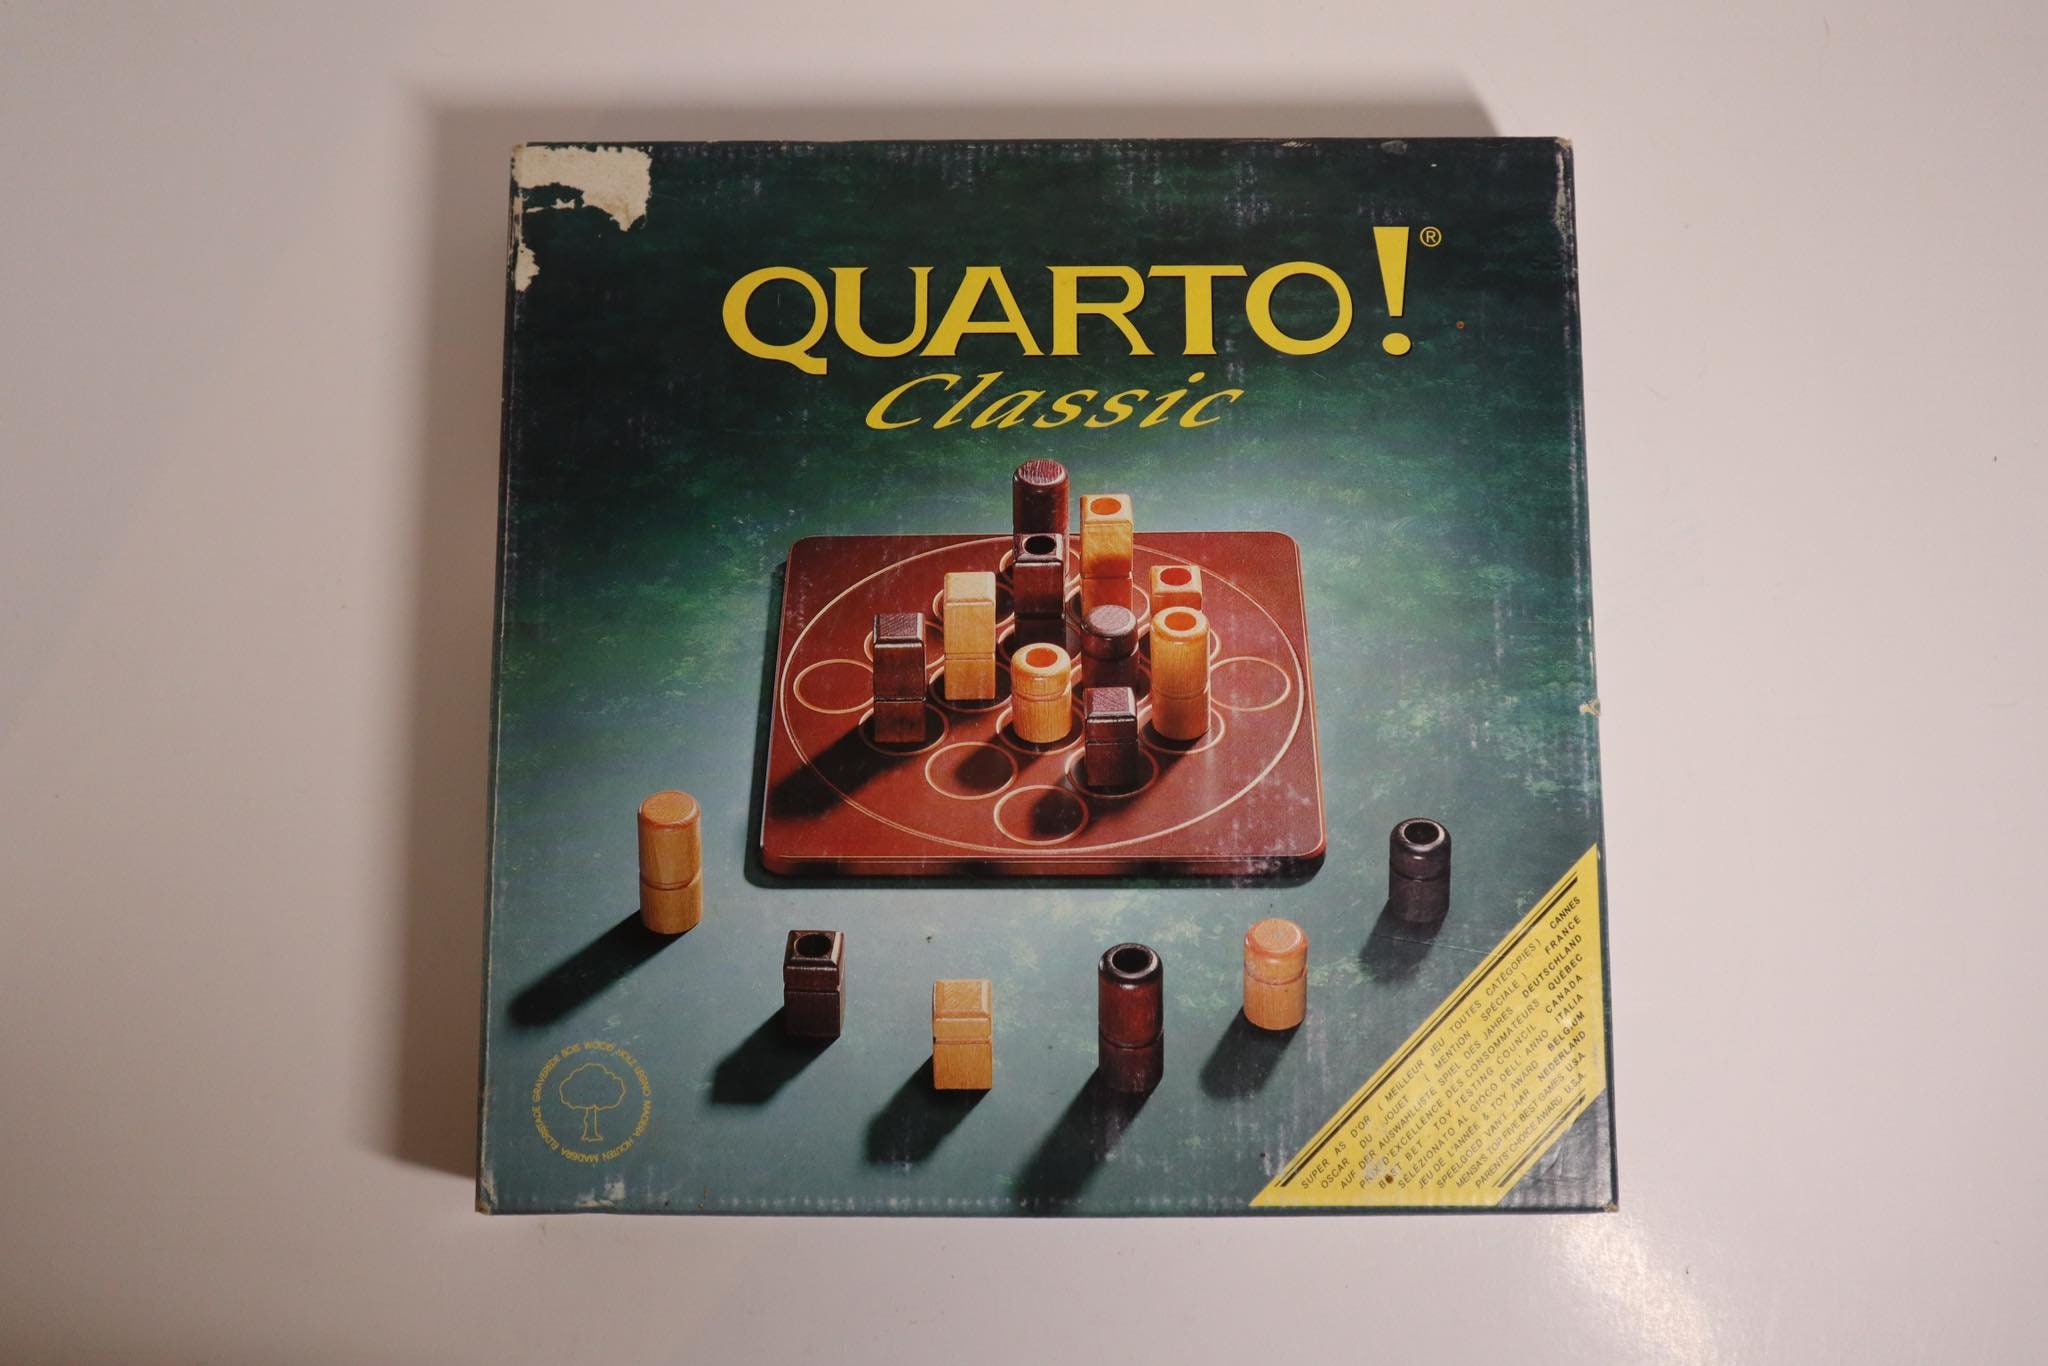 Quarto! Classic - Vintage Board Game - Gigamic 1991